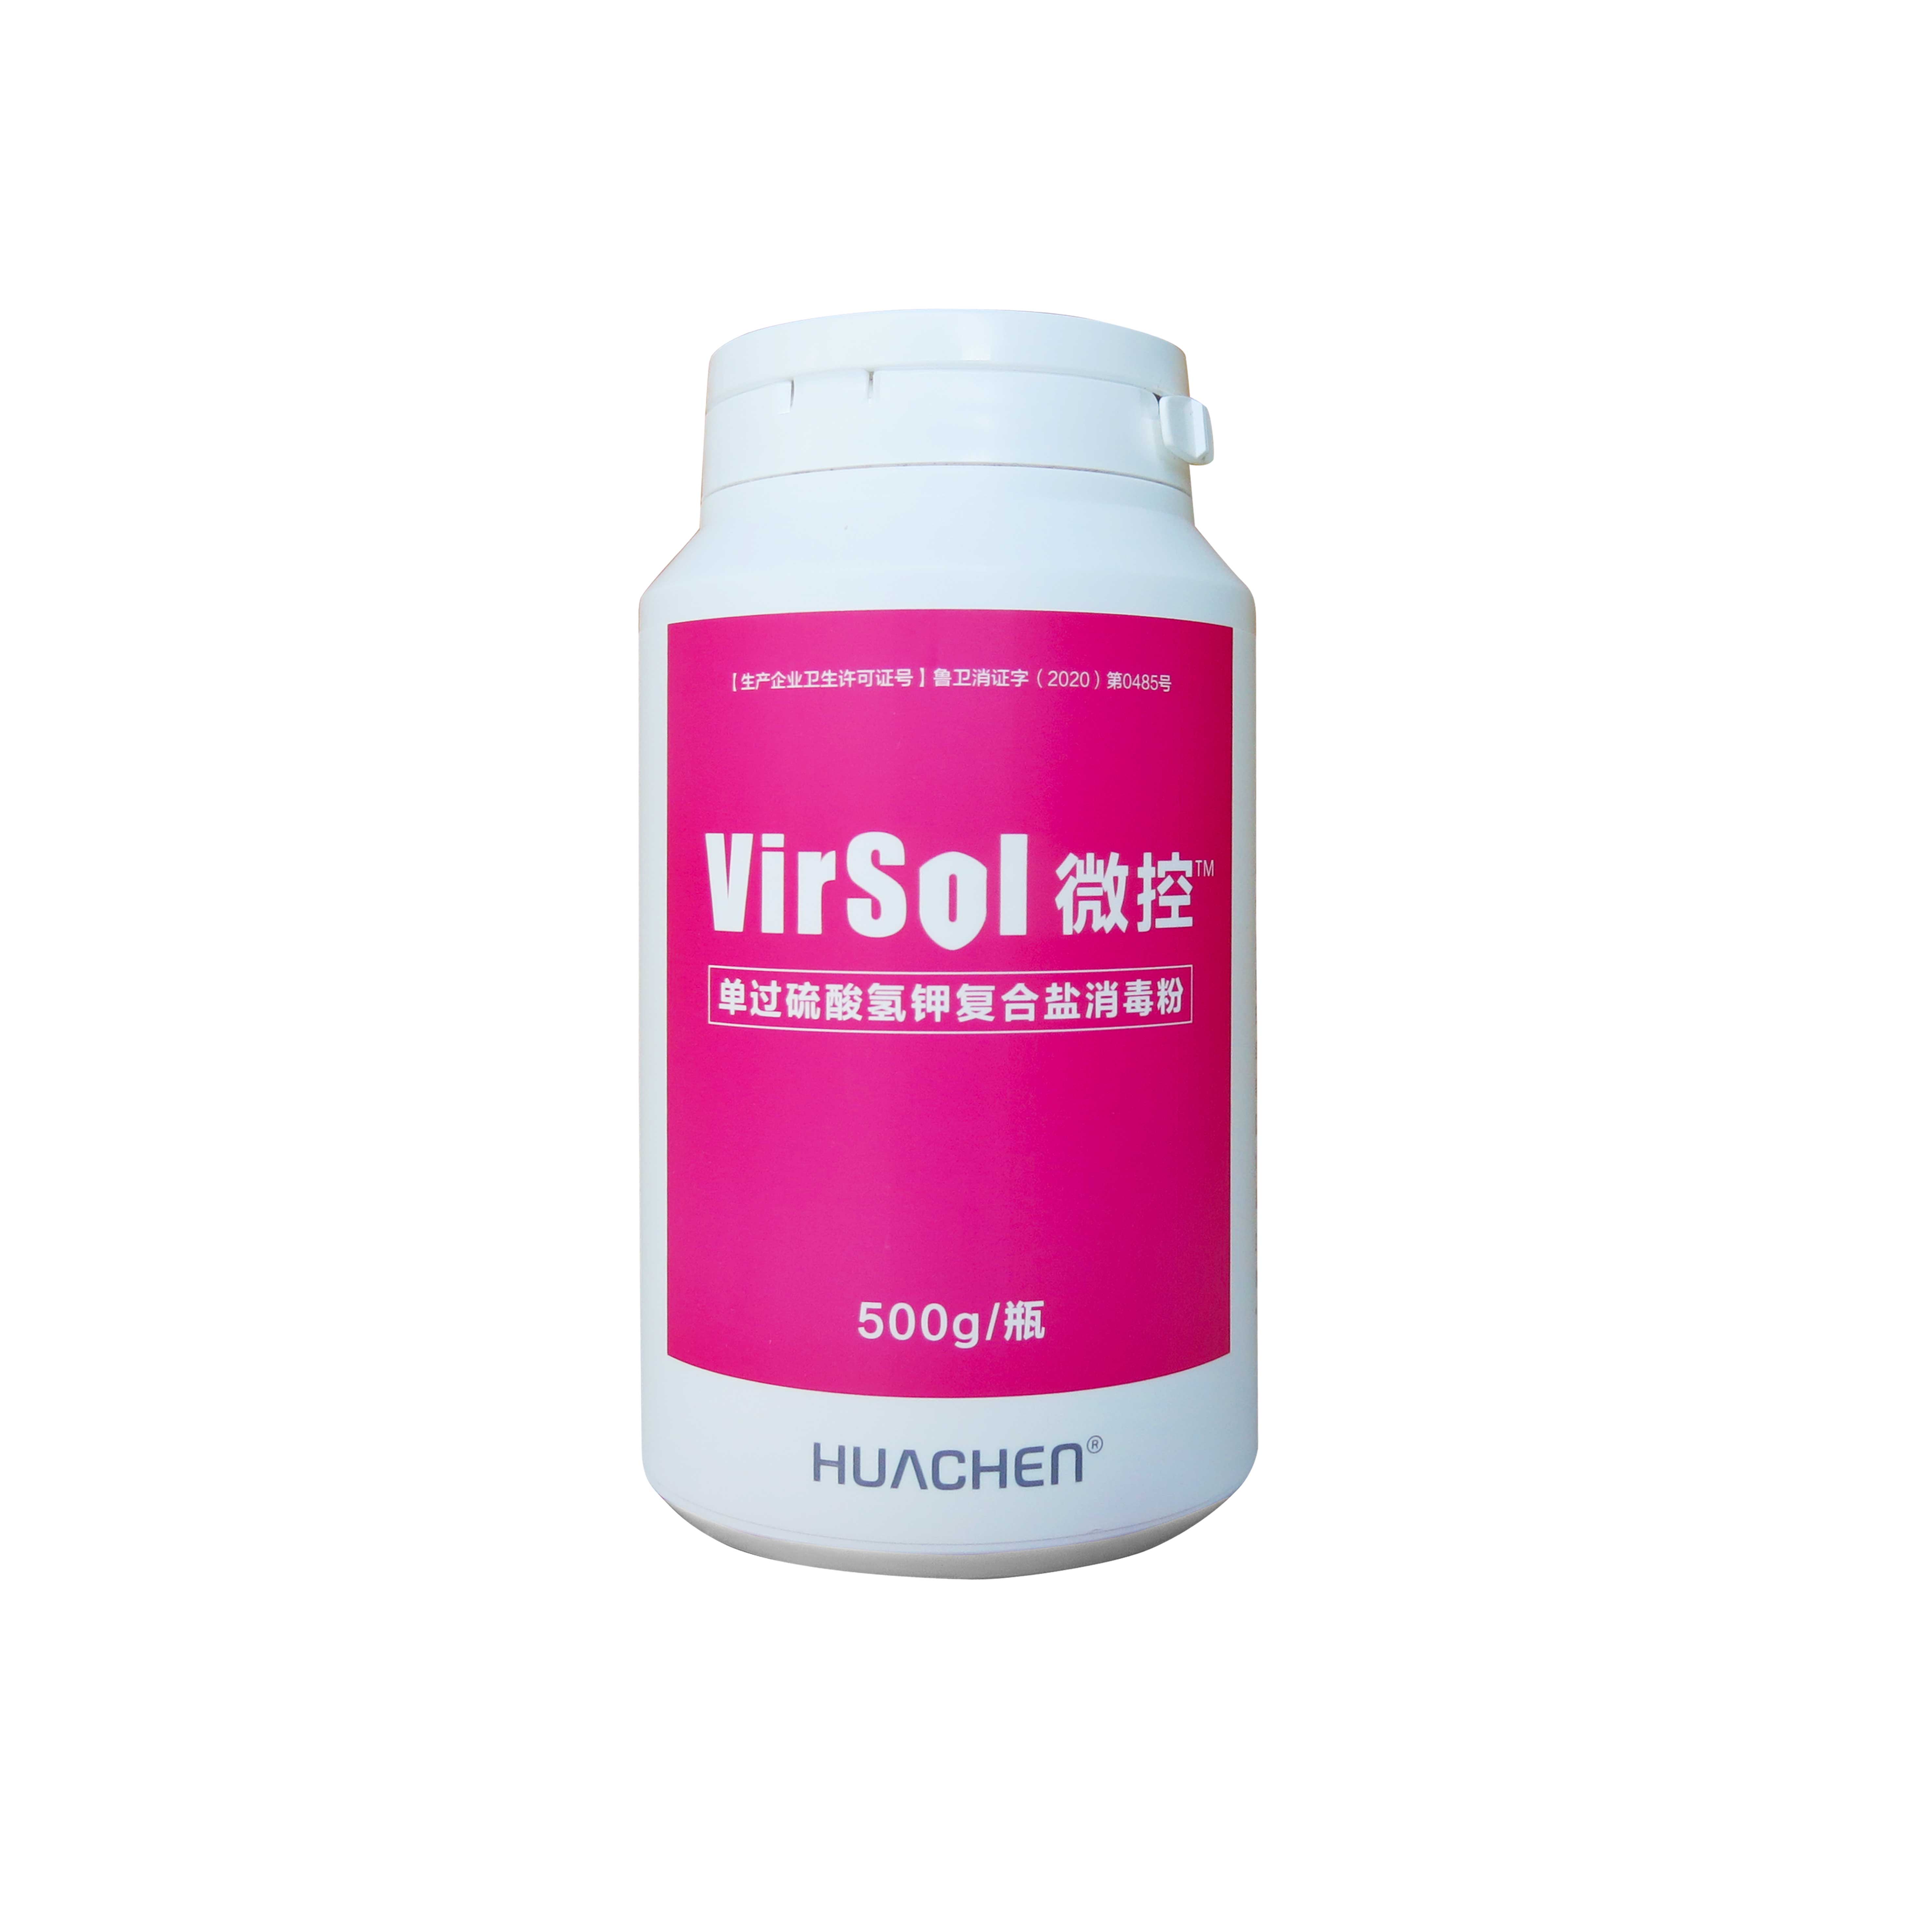 Virsol微控单过硫酸氢钾复合盐消毒粉